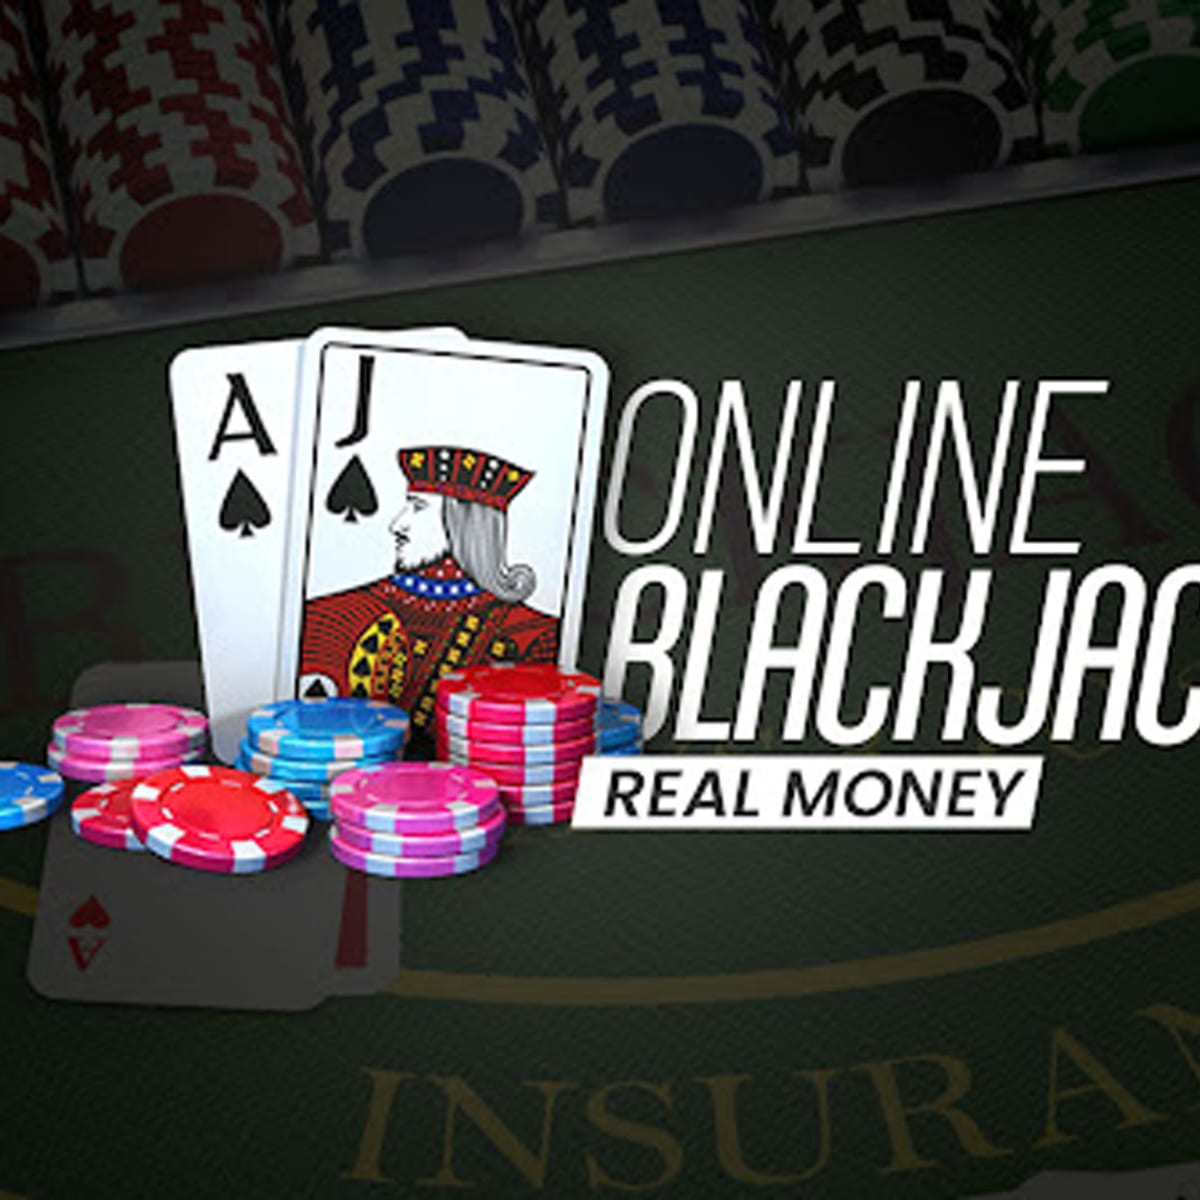 play blackjack online for real money no deposit